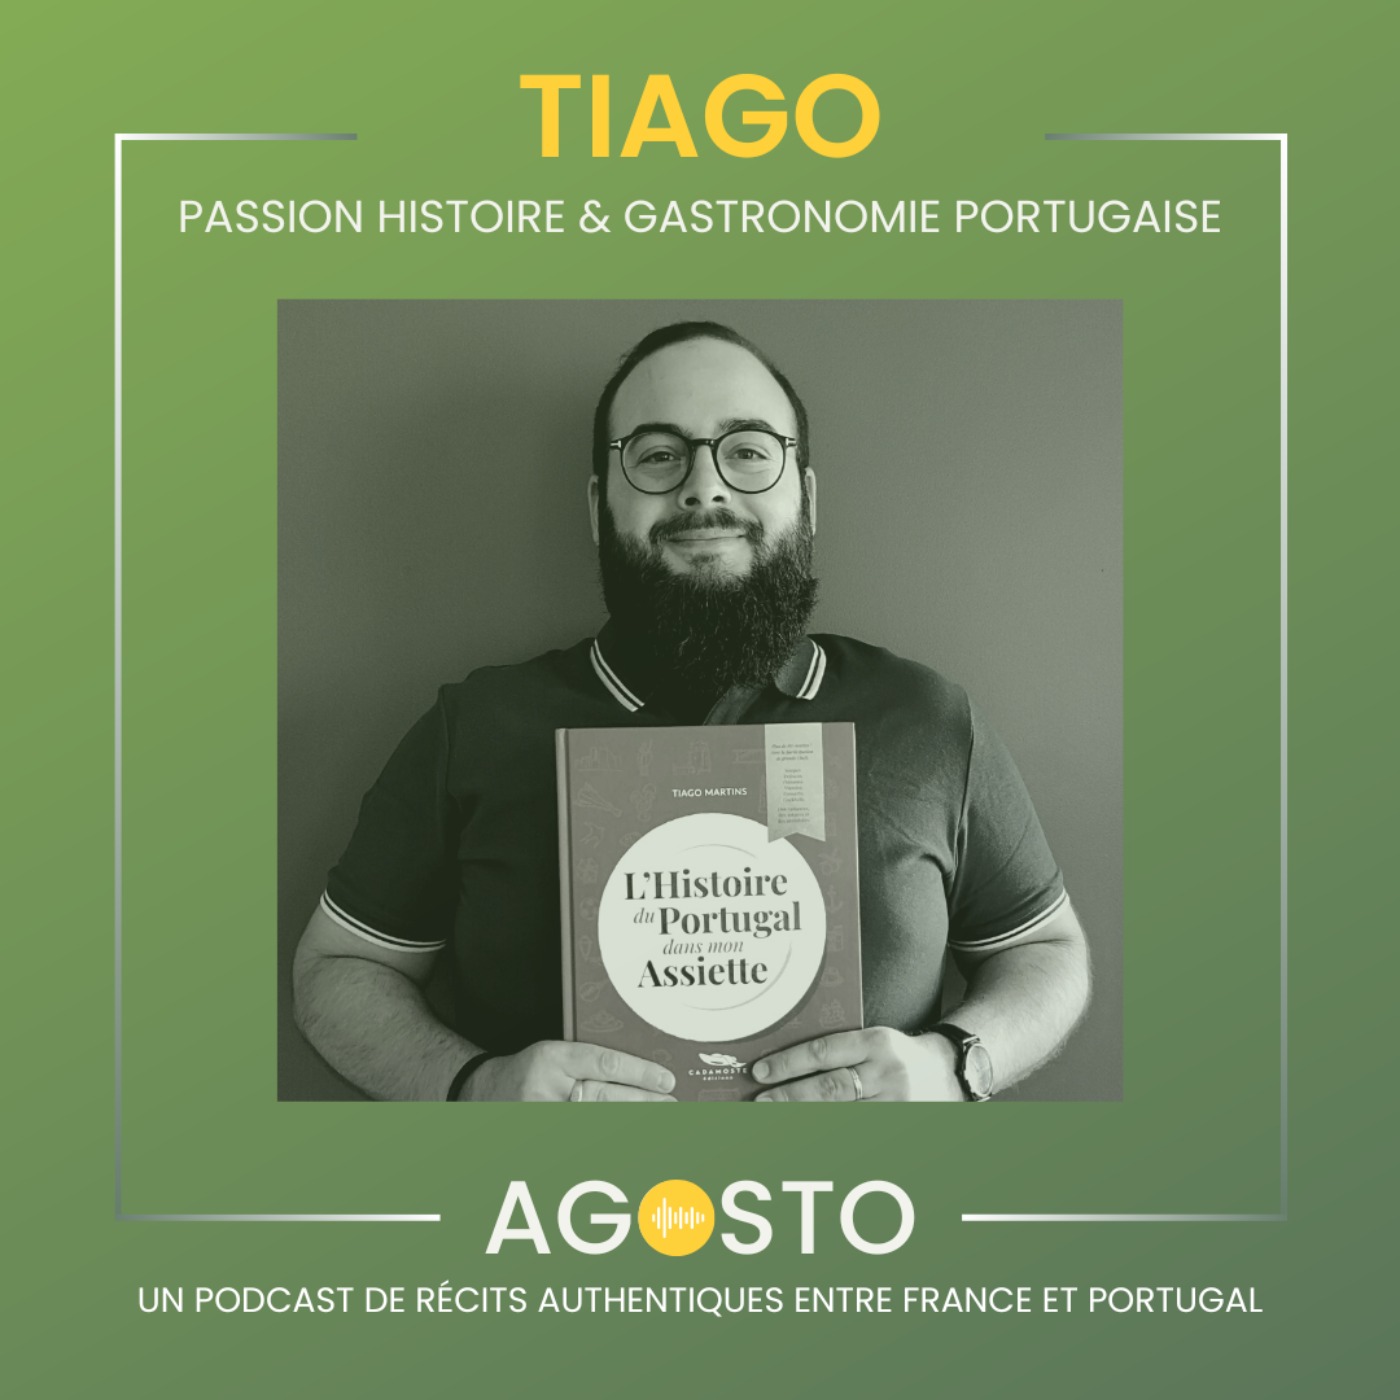 Tiago, passion Histoire & Gastronomie portugaise